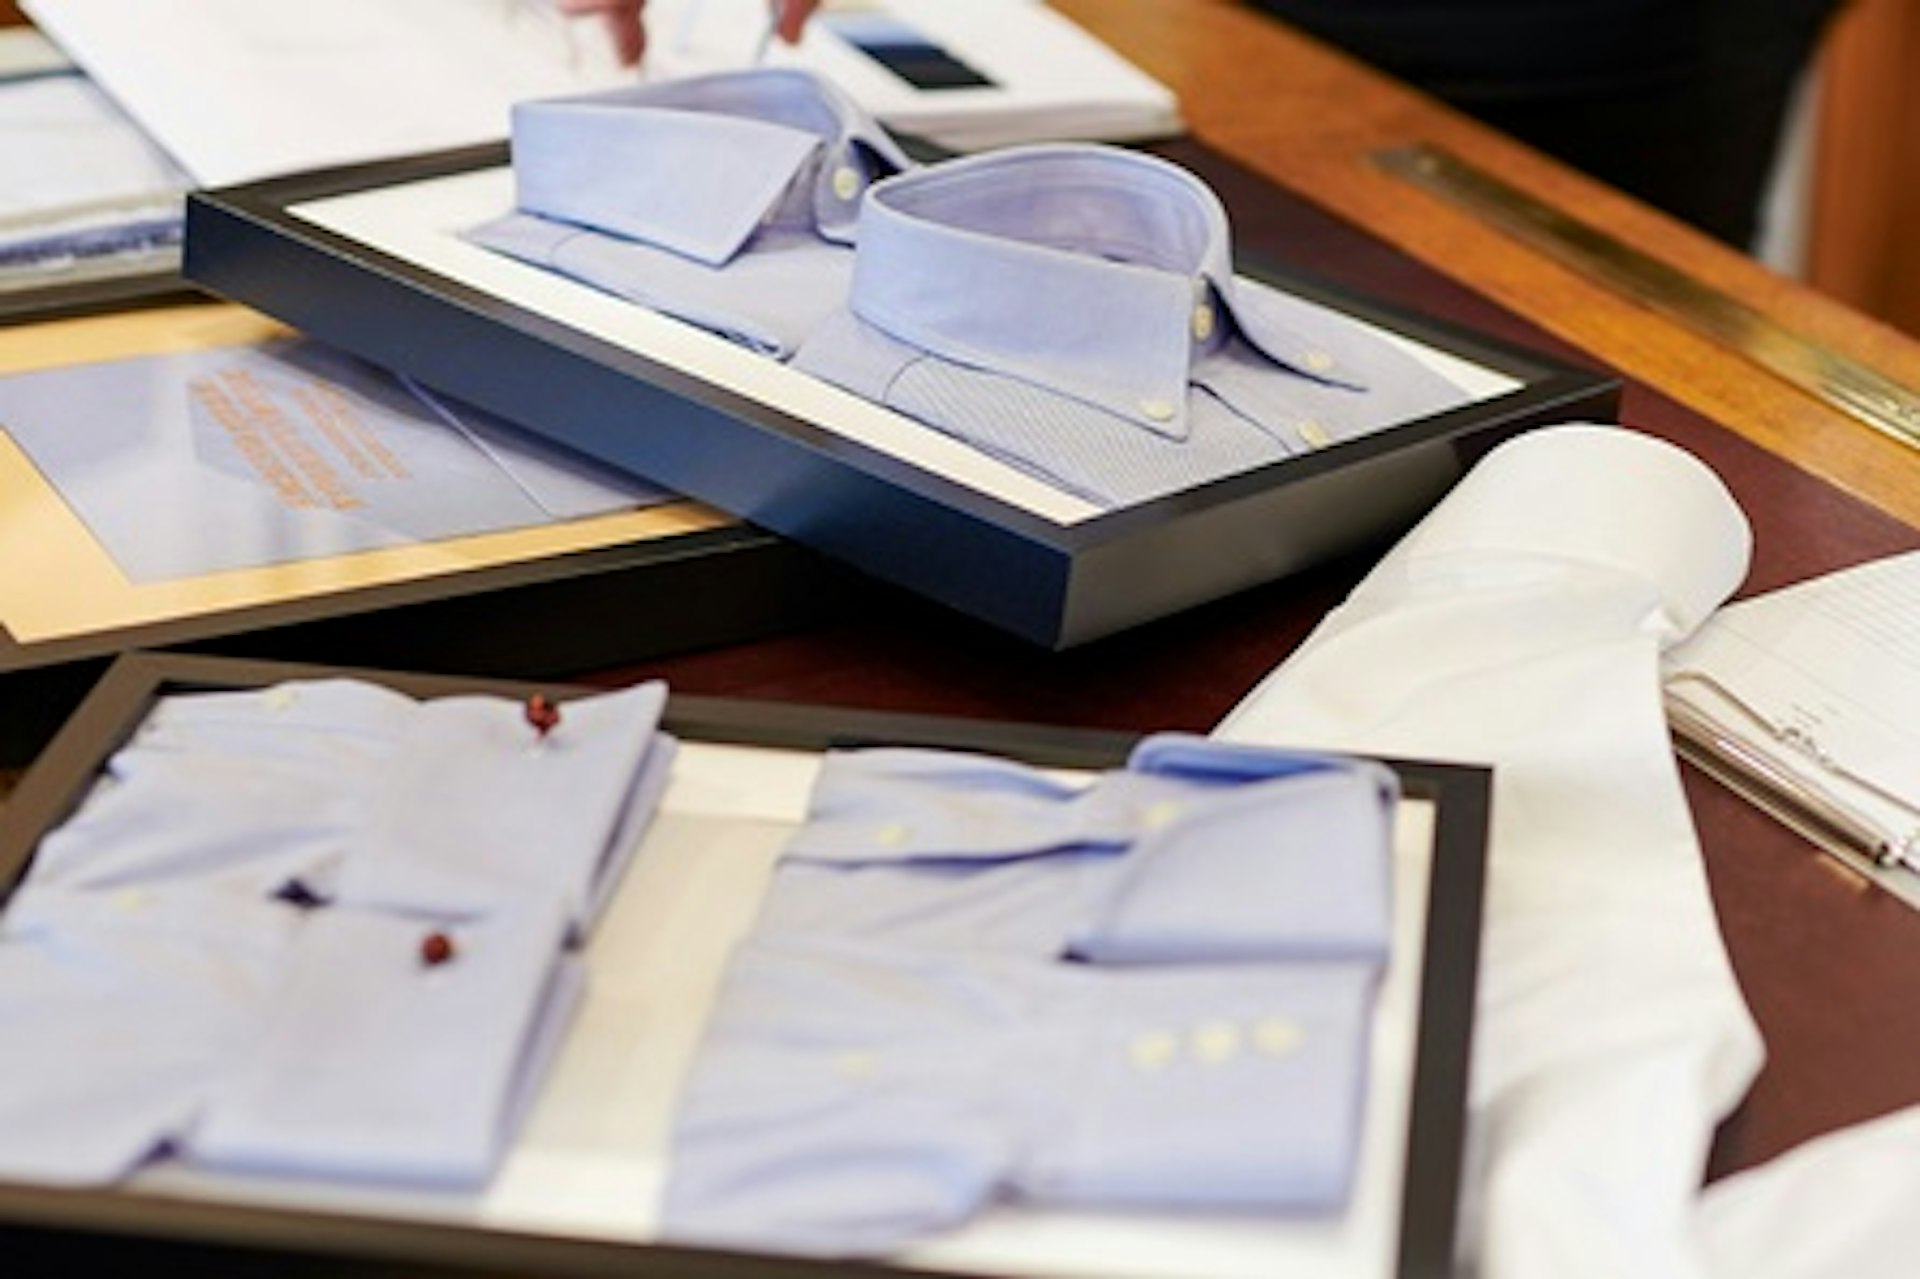 Tailored Gentleman's Suit with Premium Italian Cloth at The Savile Row Company Custom Made 4